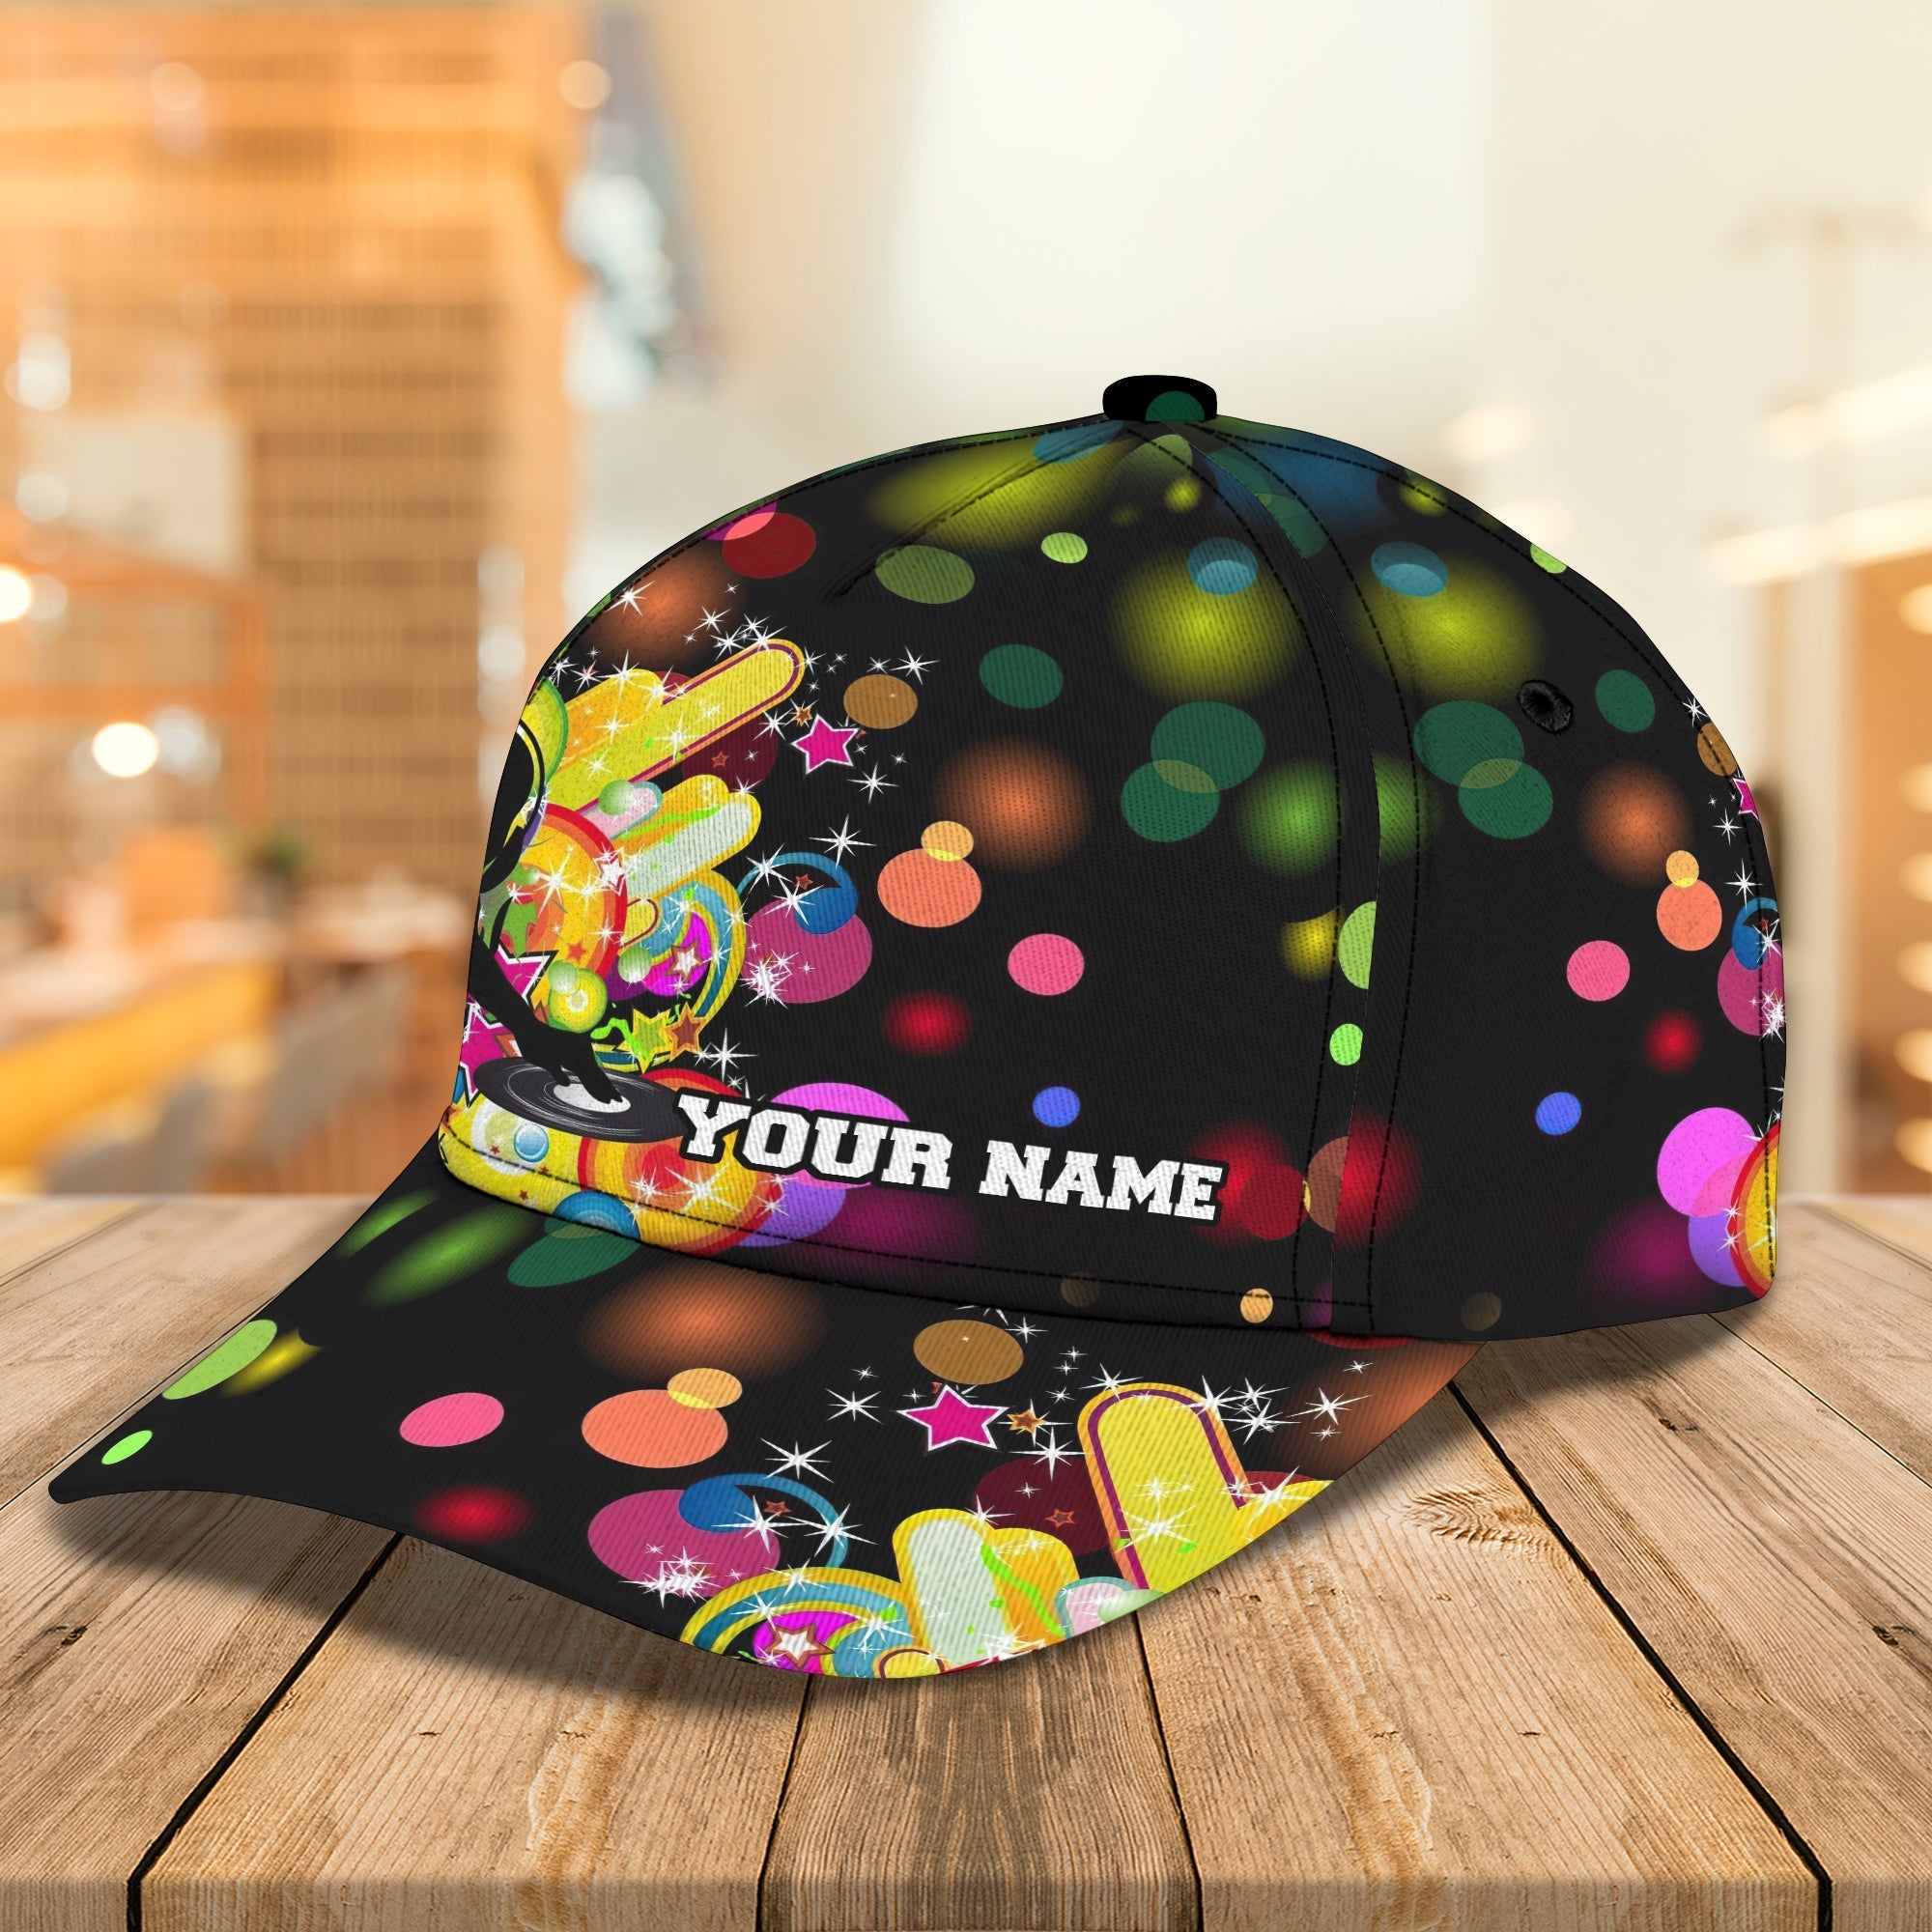 Personalized With Name 3D Full Printed Baseball Cap For Deezay/ Dj Cap Hat/ Classic Dj Hat/ Dj Gifts